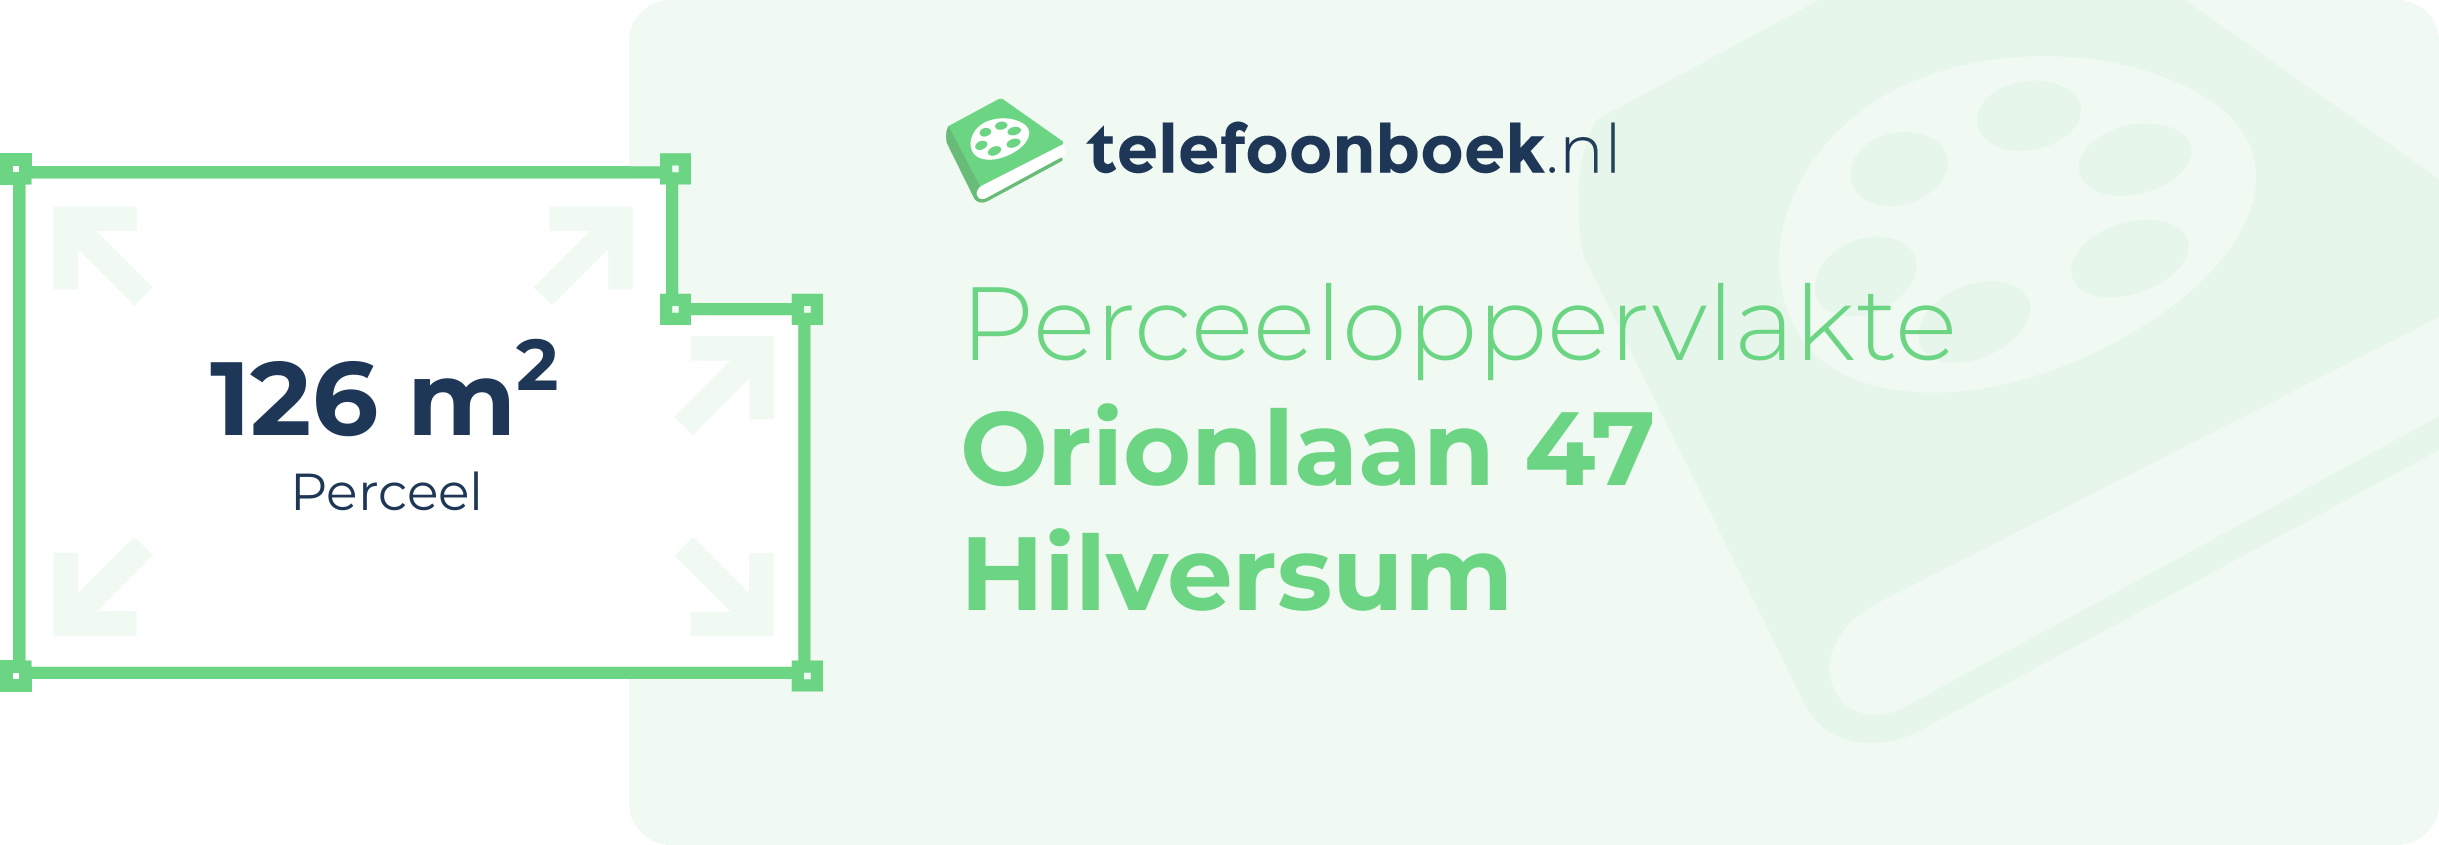 Perceeloppervlakte Orionlaan 47 Hilversum